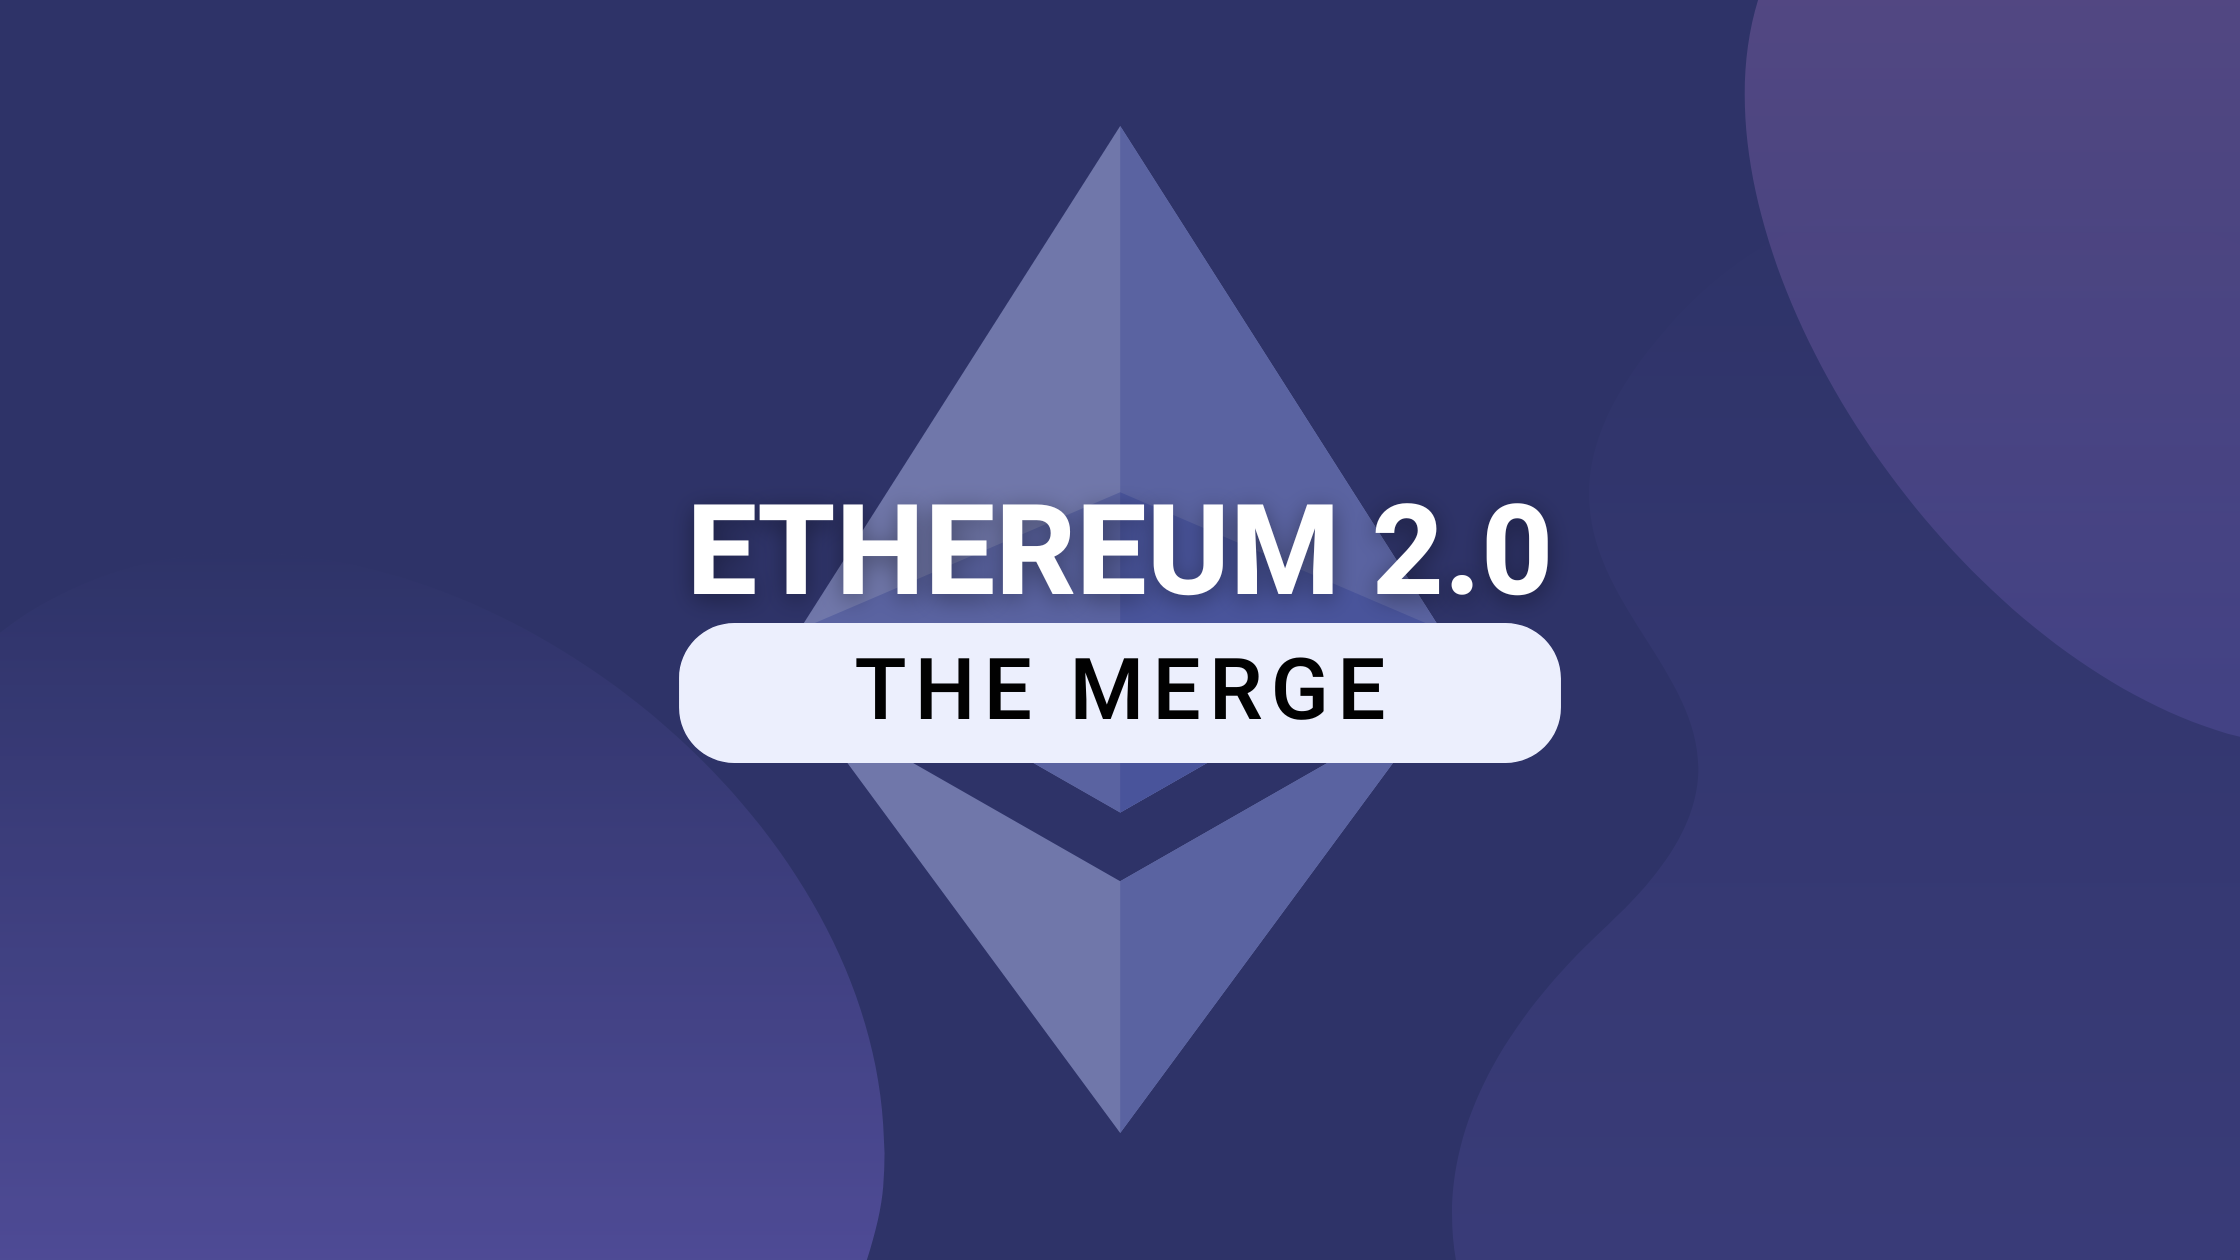 The Ethereum Merge